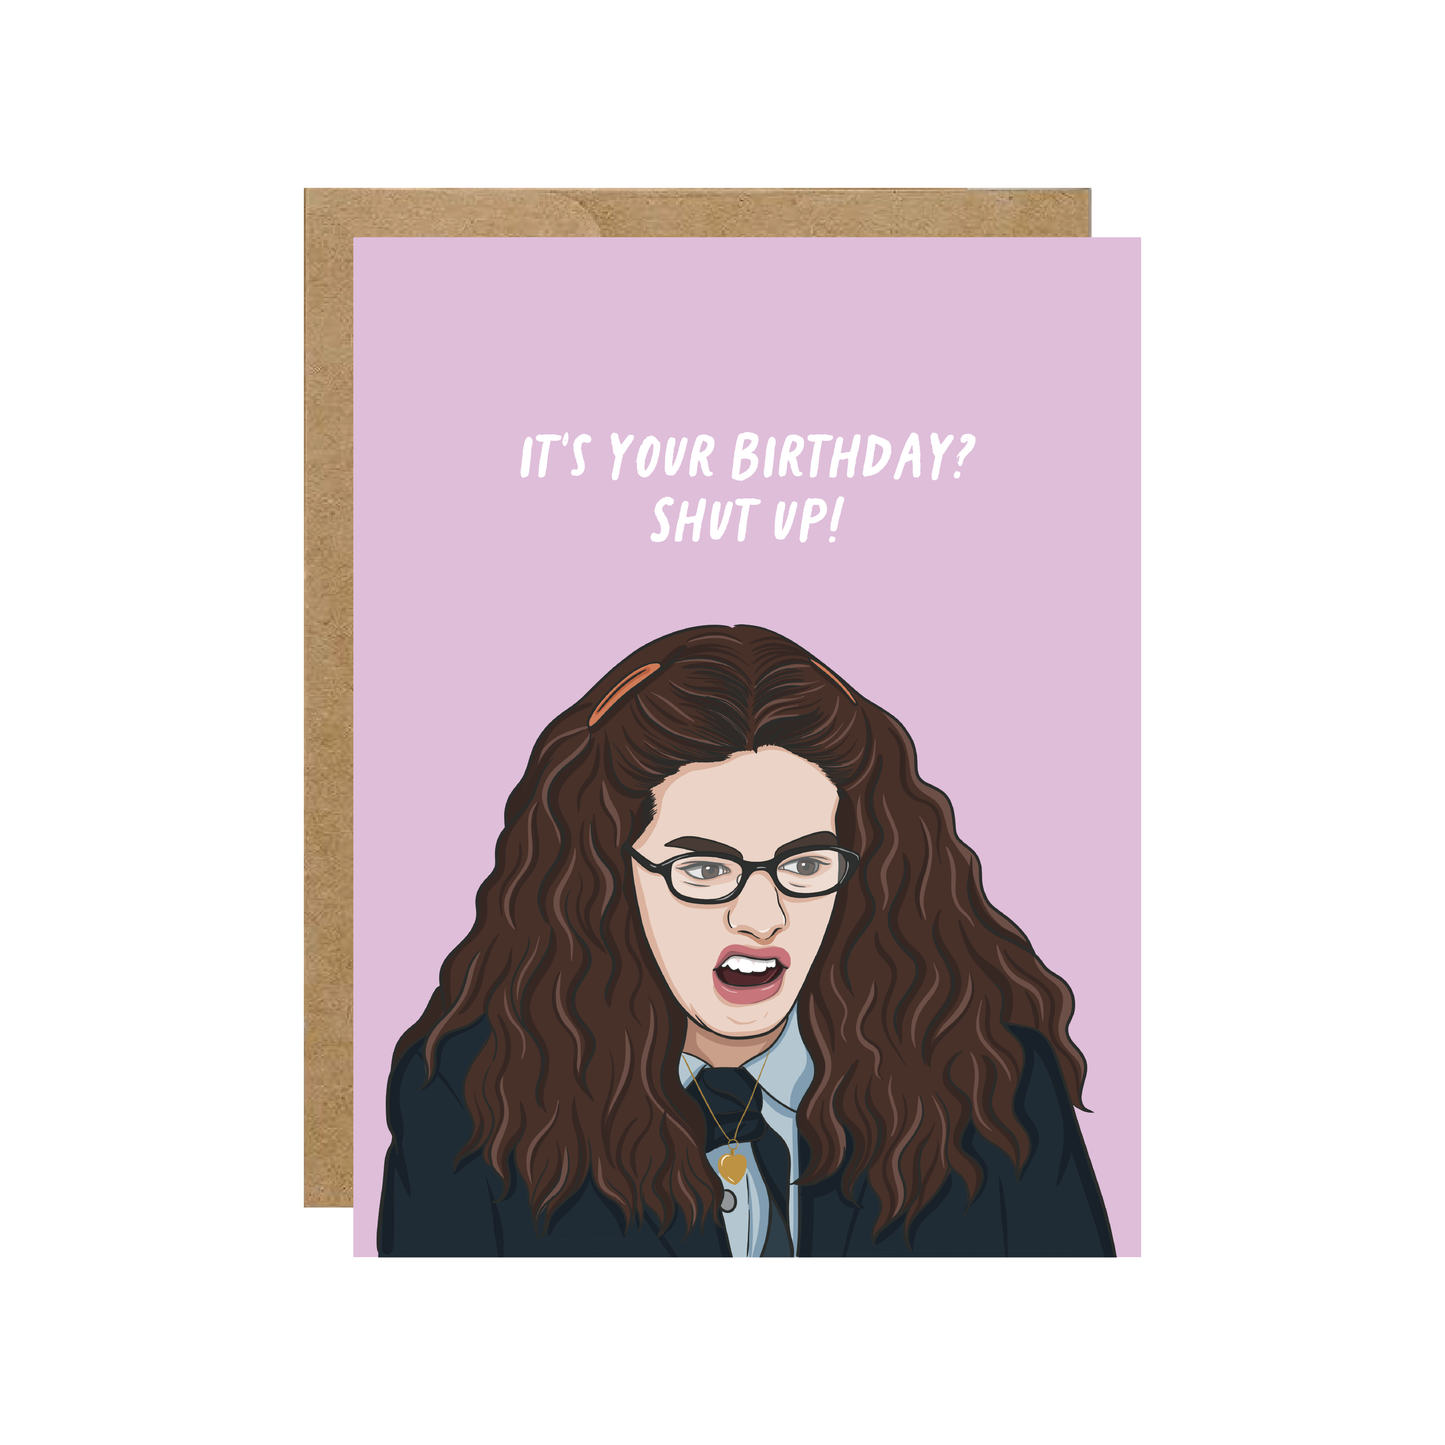 Mia It's Your Birthday? Shut up! Birthday Card